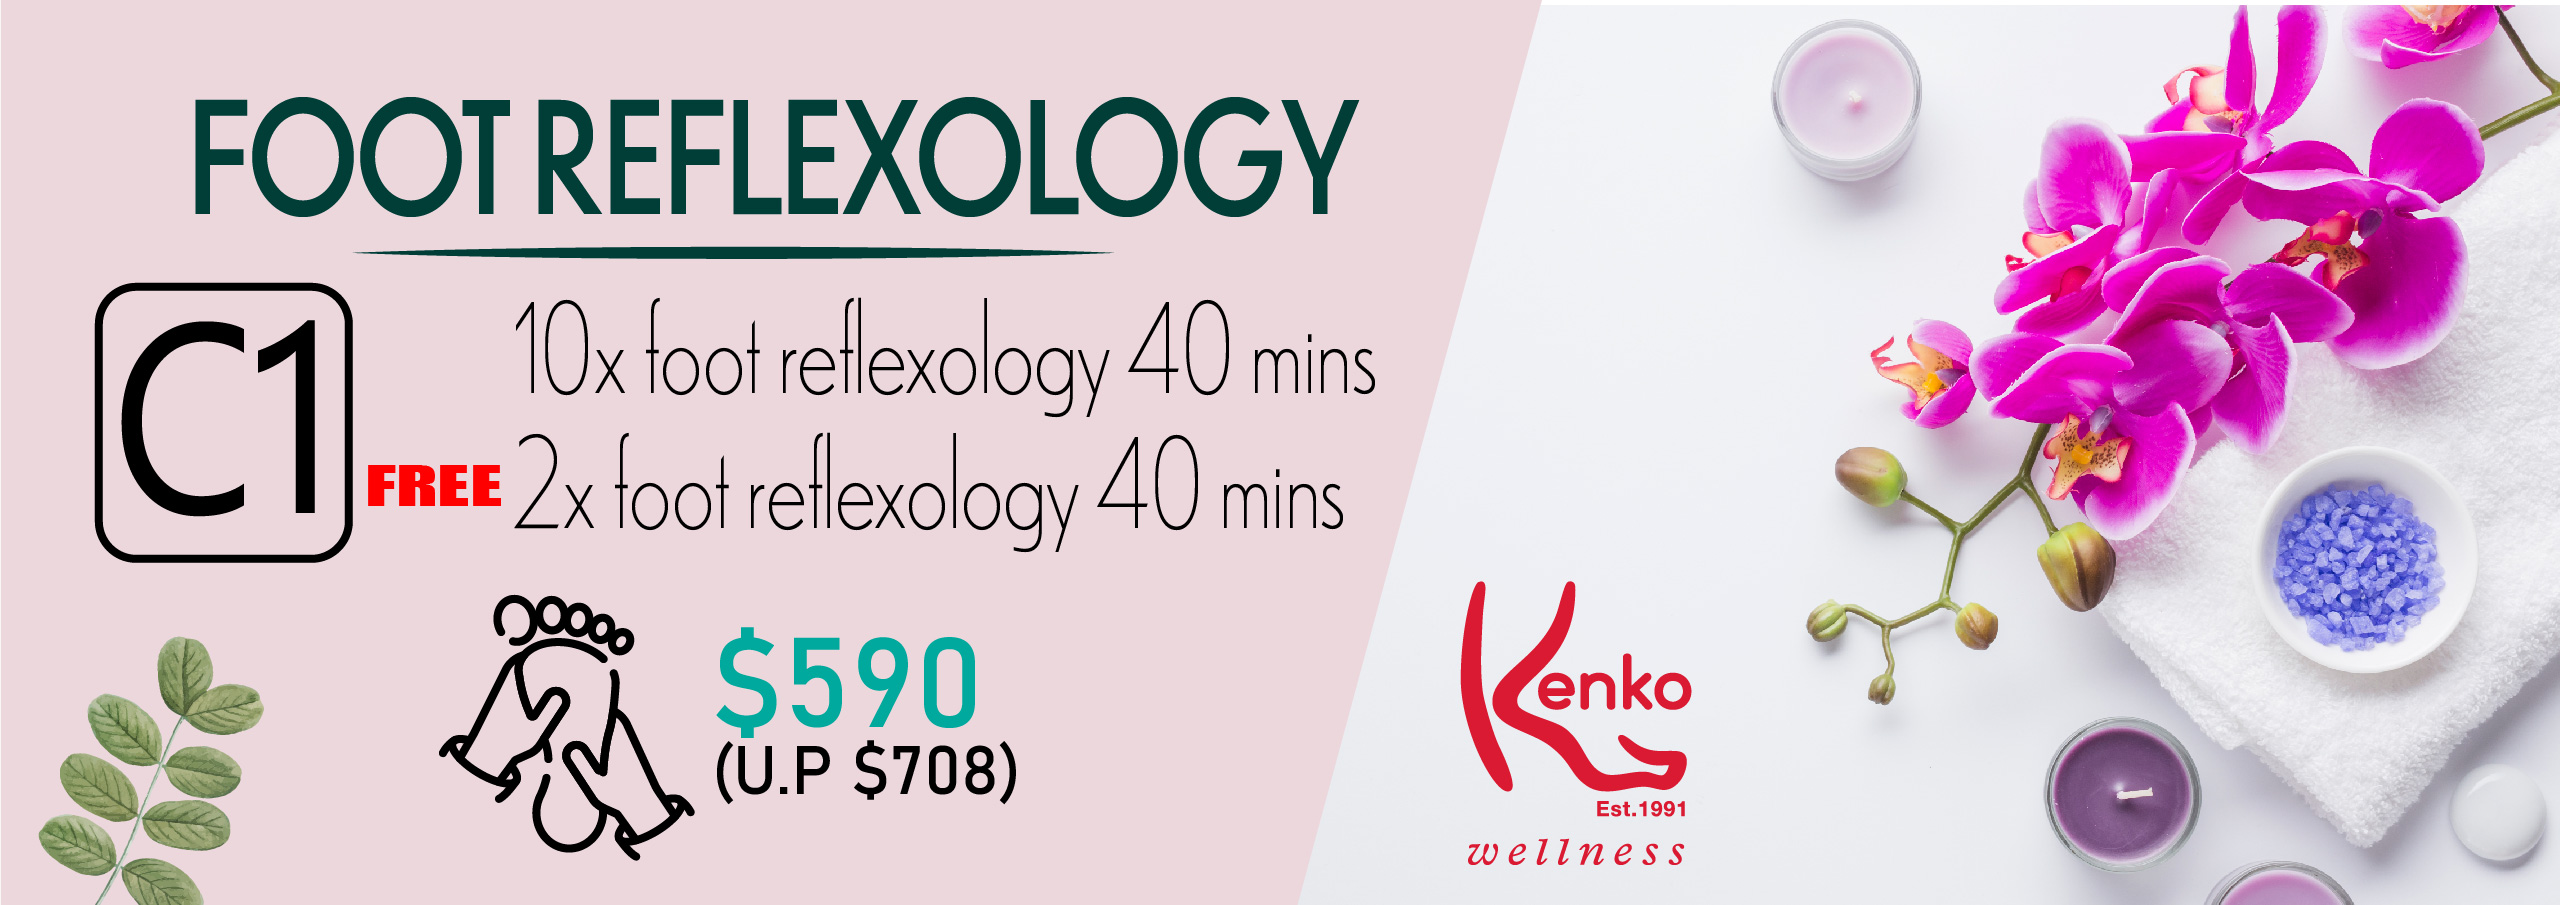 signature foot reflexology package kenko